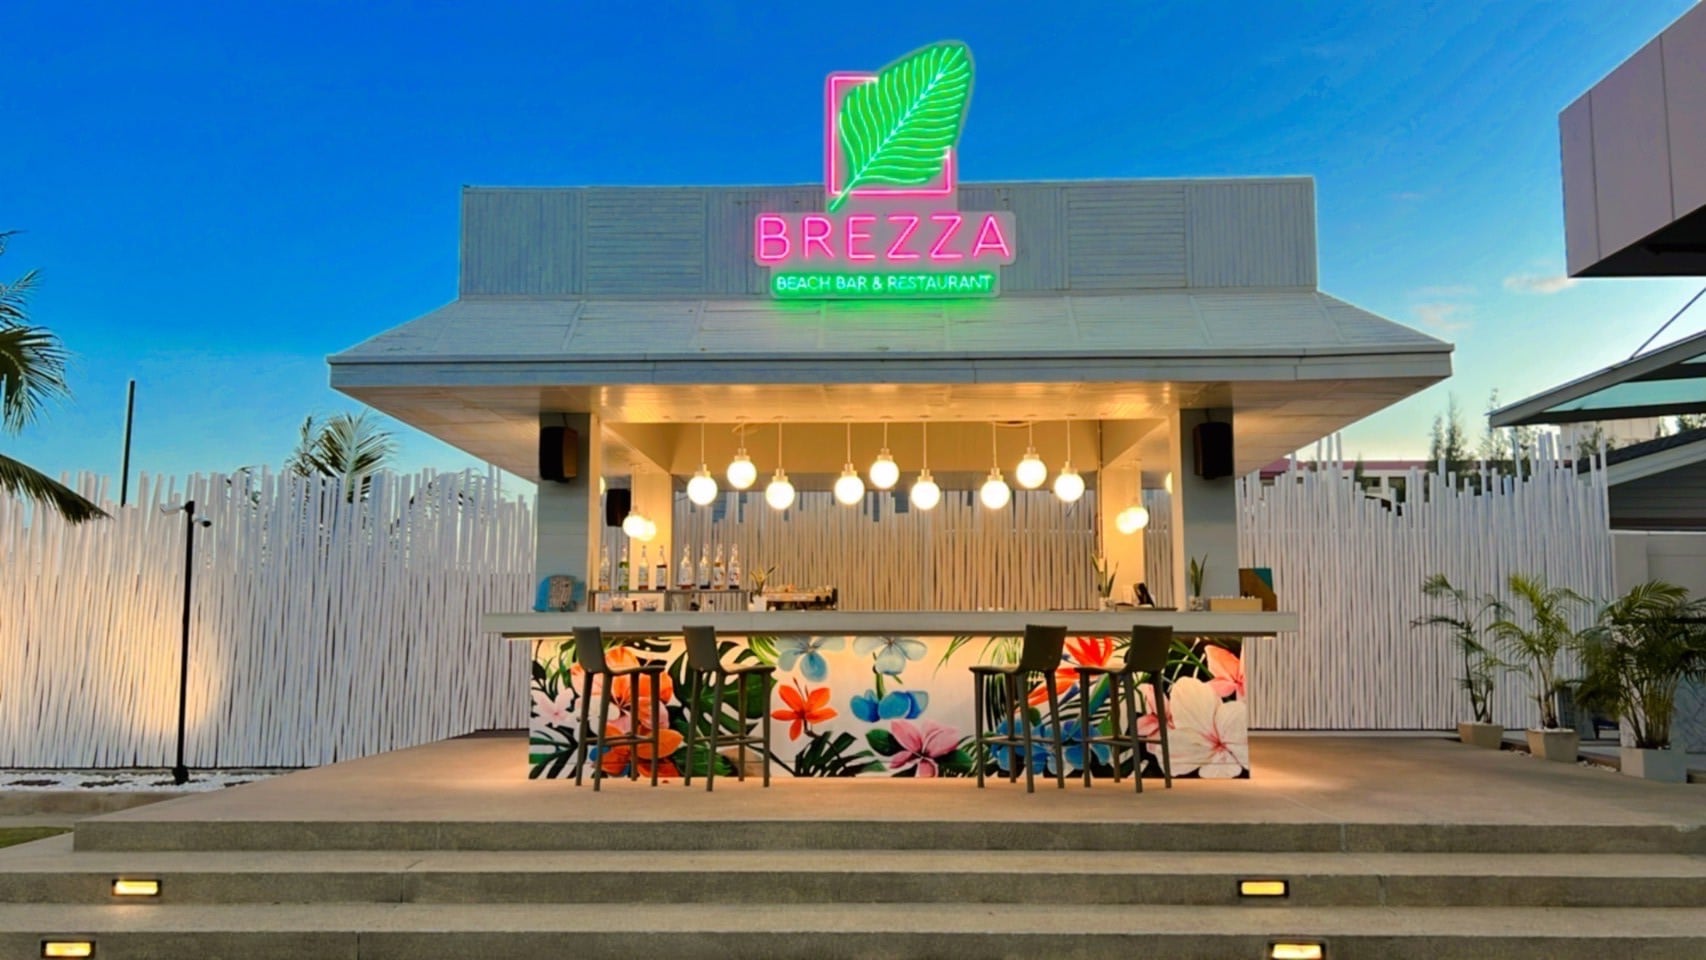 Brezza Beach Bar & Restaurant (Brezza Beach Bar & Restaurant) : เพชรบุรี (Phetchaburi)